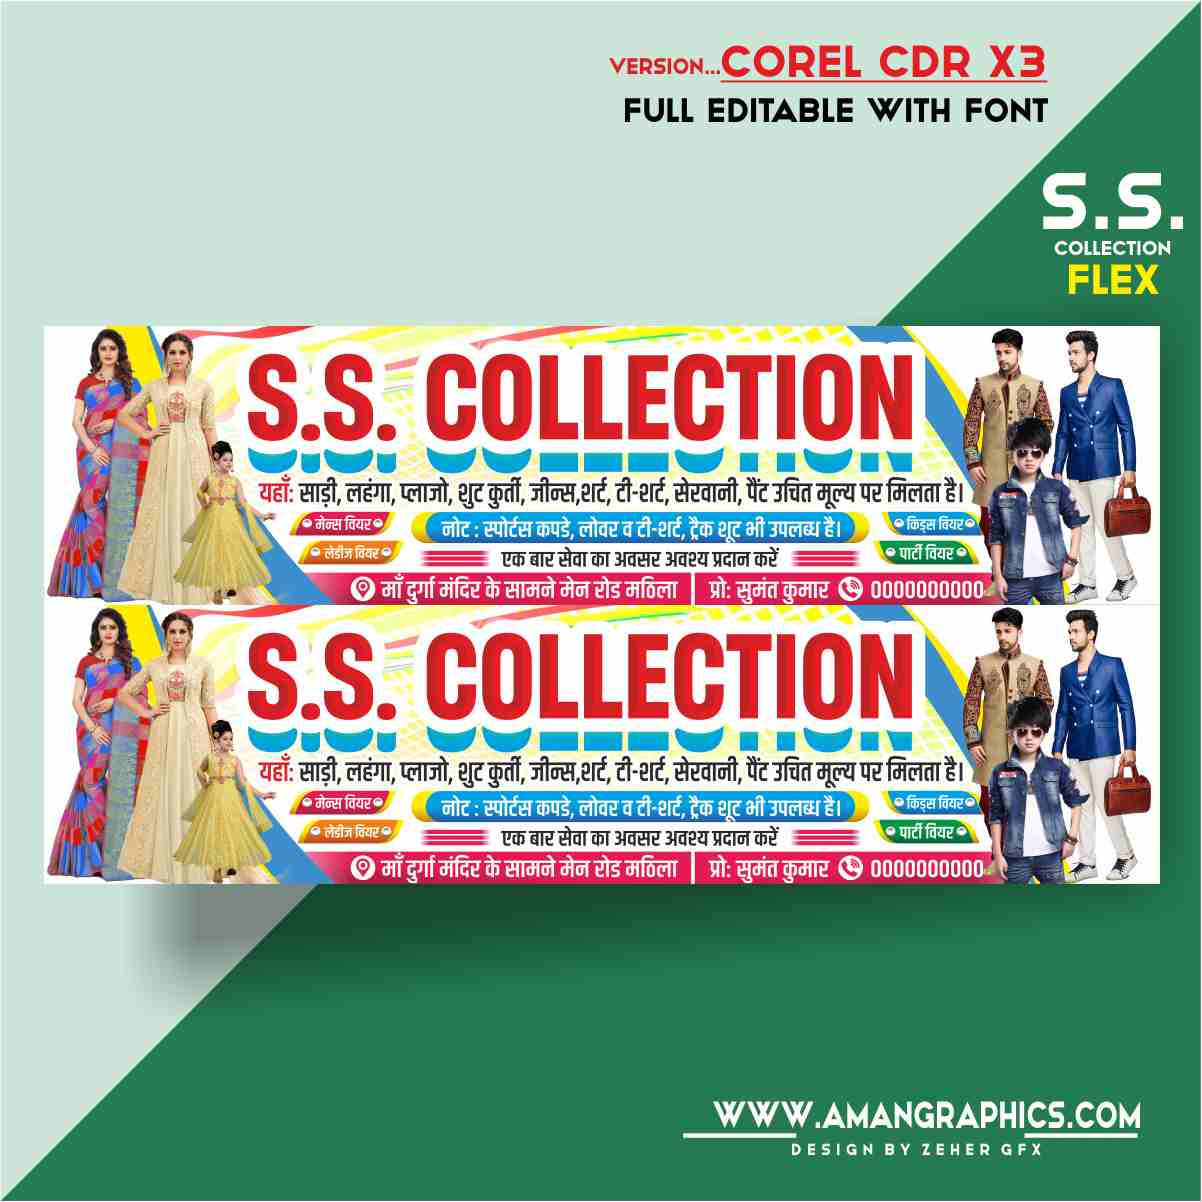 S.S. Collection Grament Cloth Shop Banner Design Cdr File FLEX BANNER FLEX